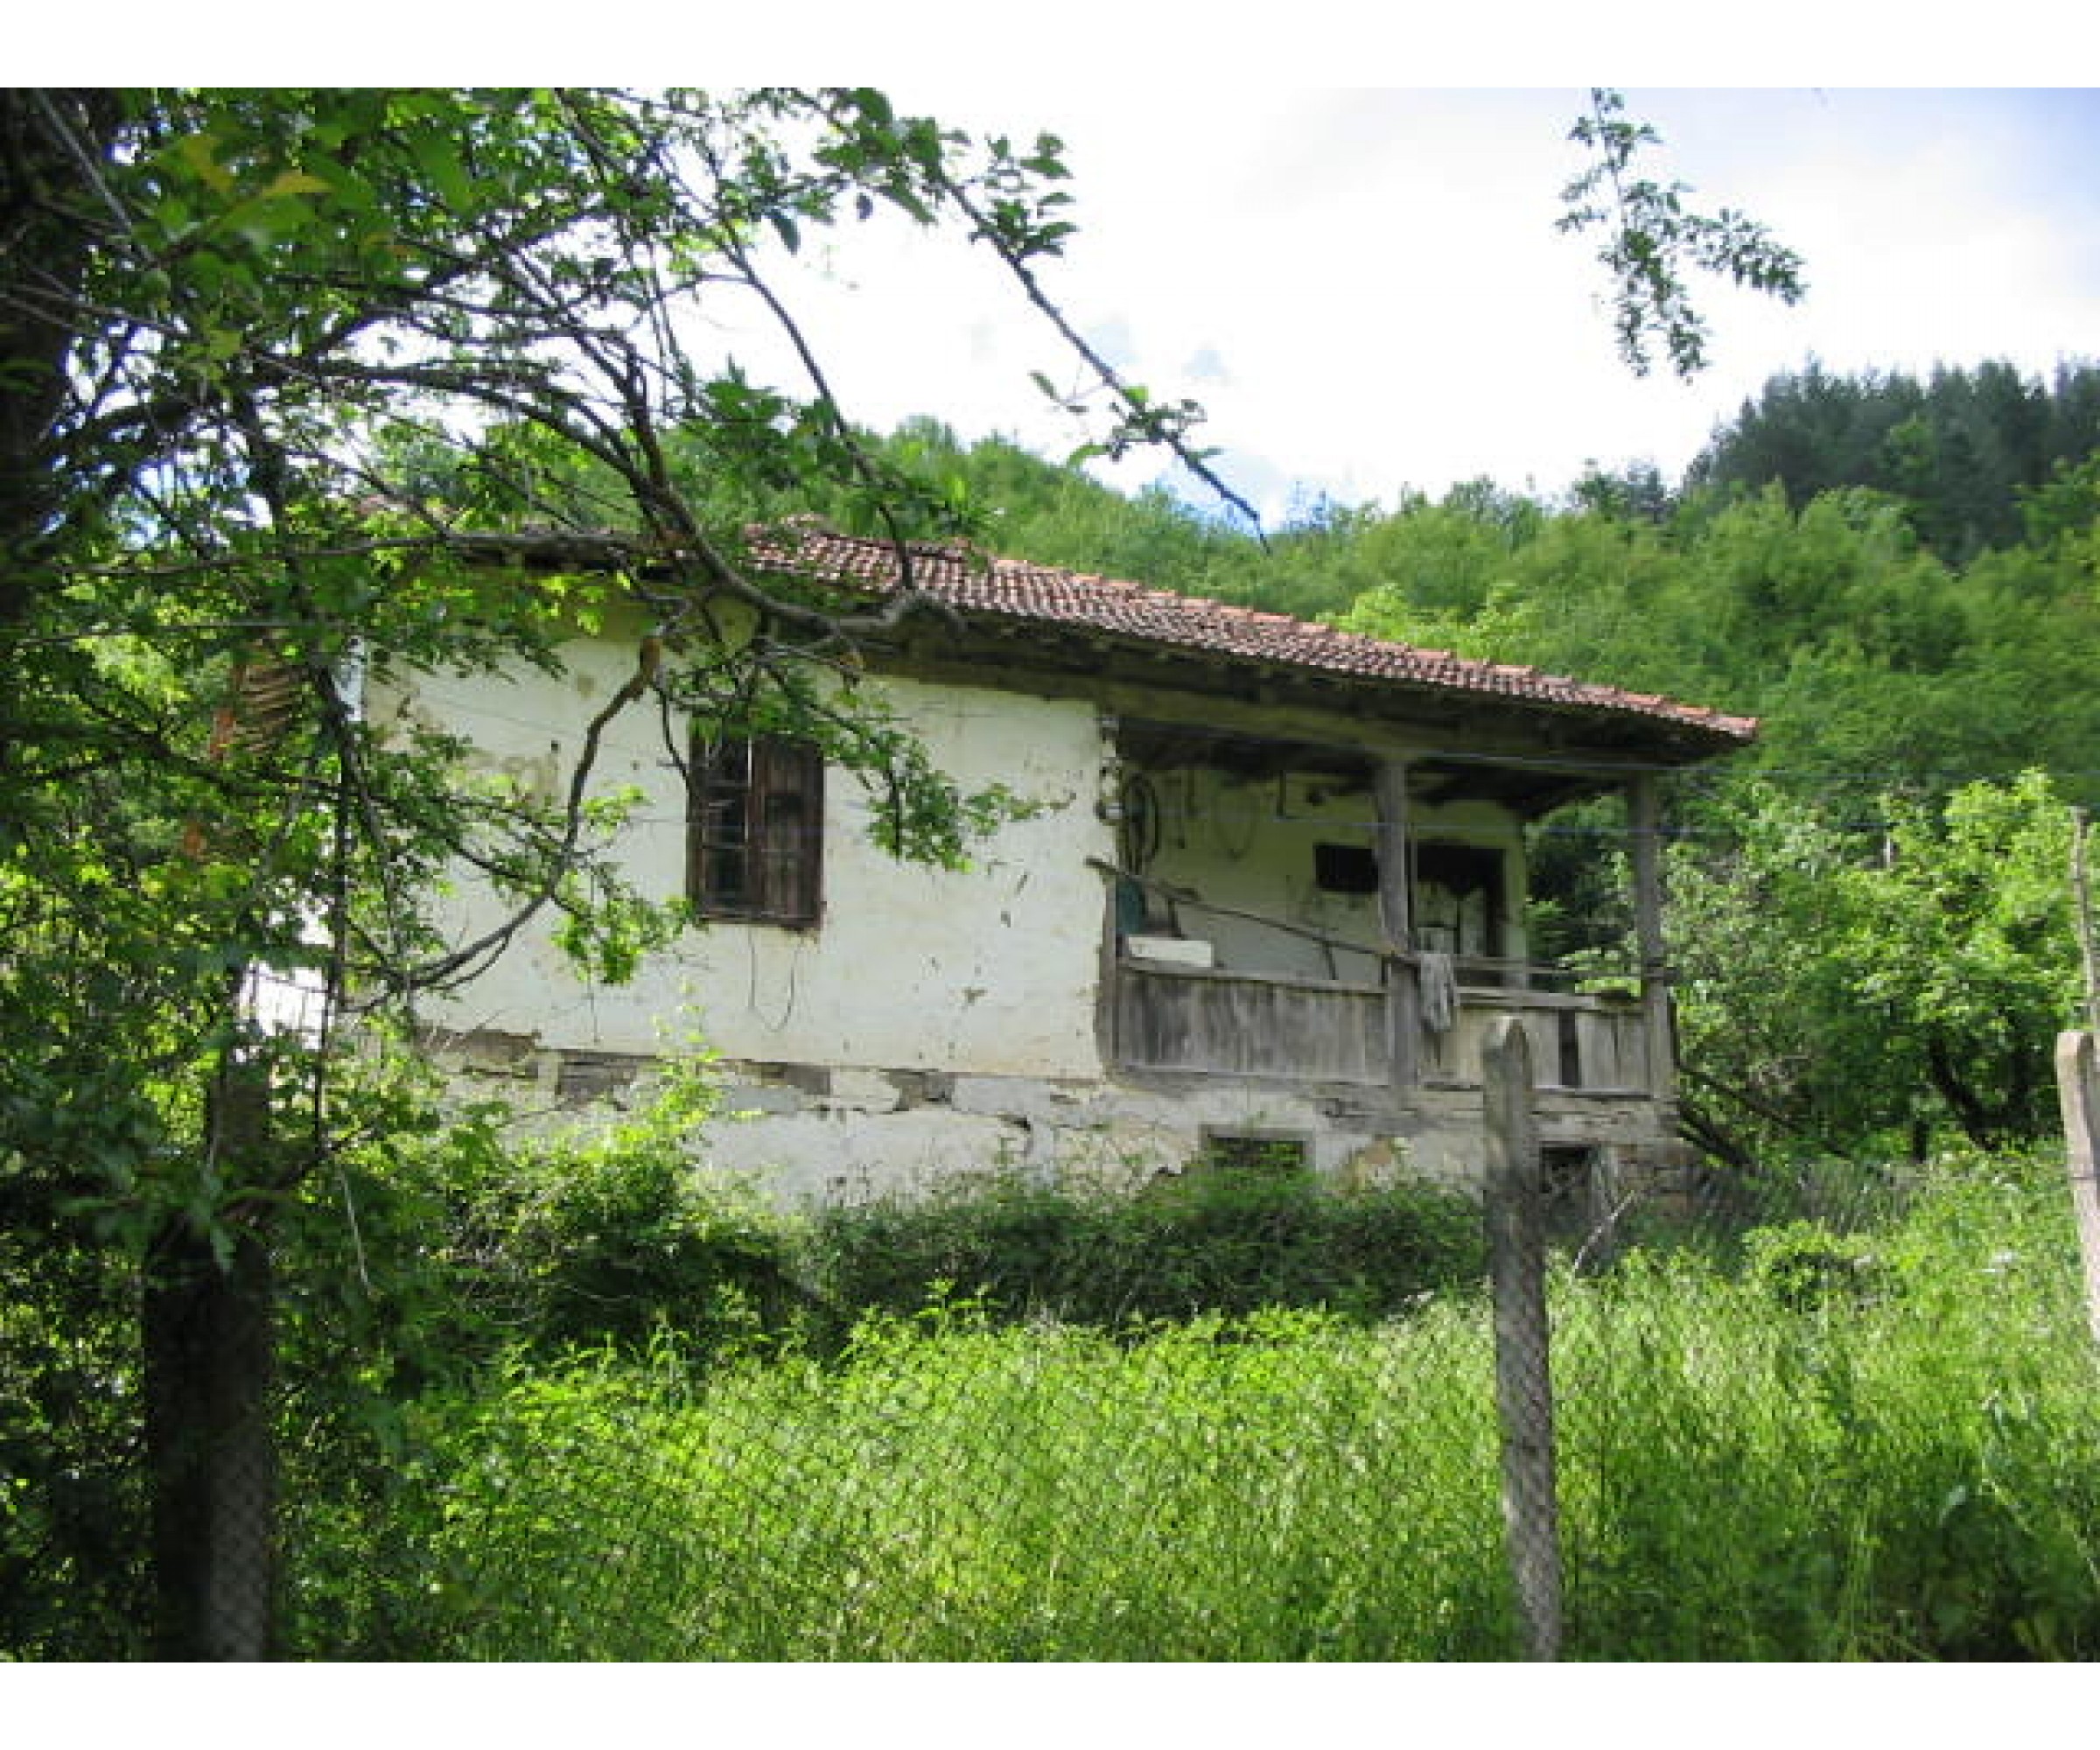 House in the village of Brusen